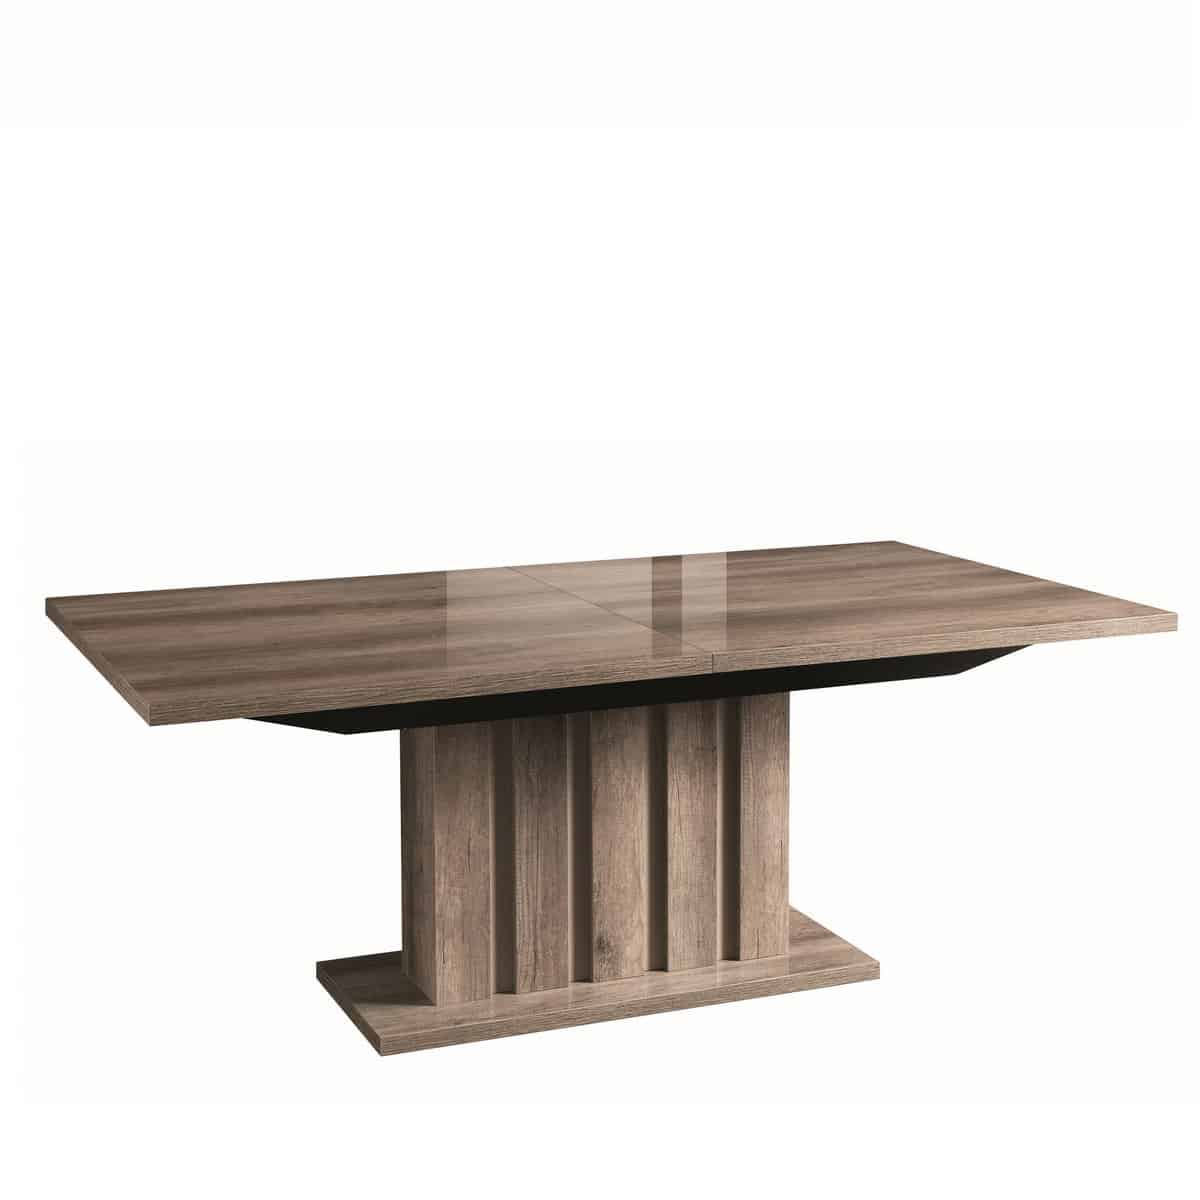 ALF Matera, modern dining, contemporary dining, dining table